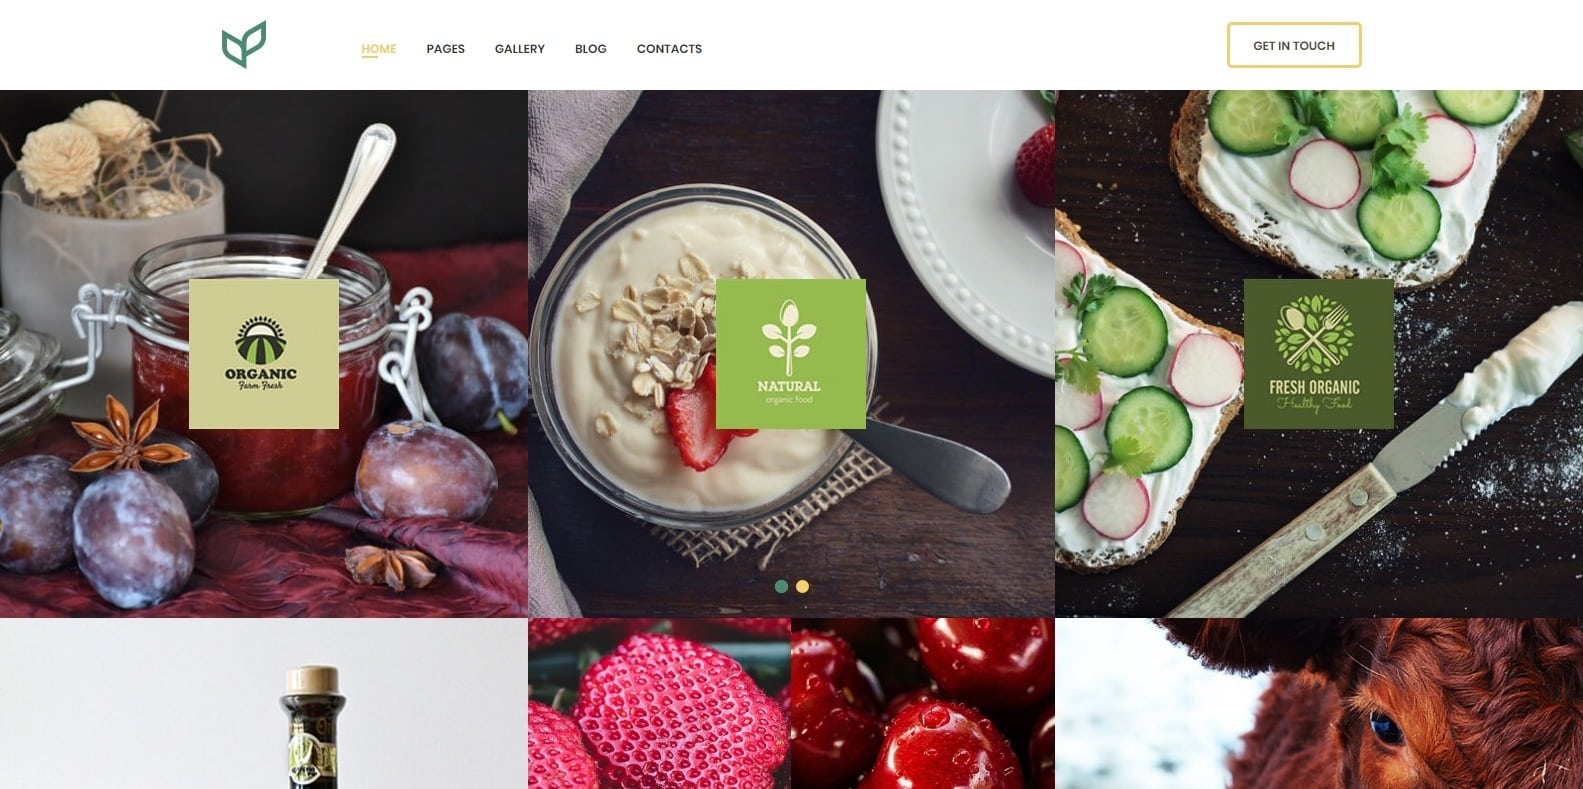 agricom-food-blog-website-template